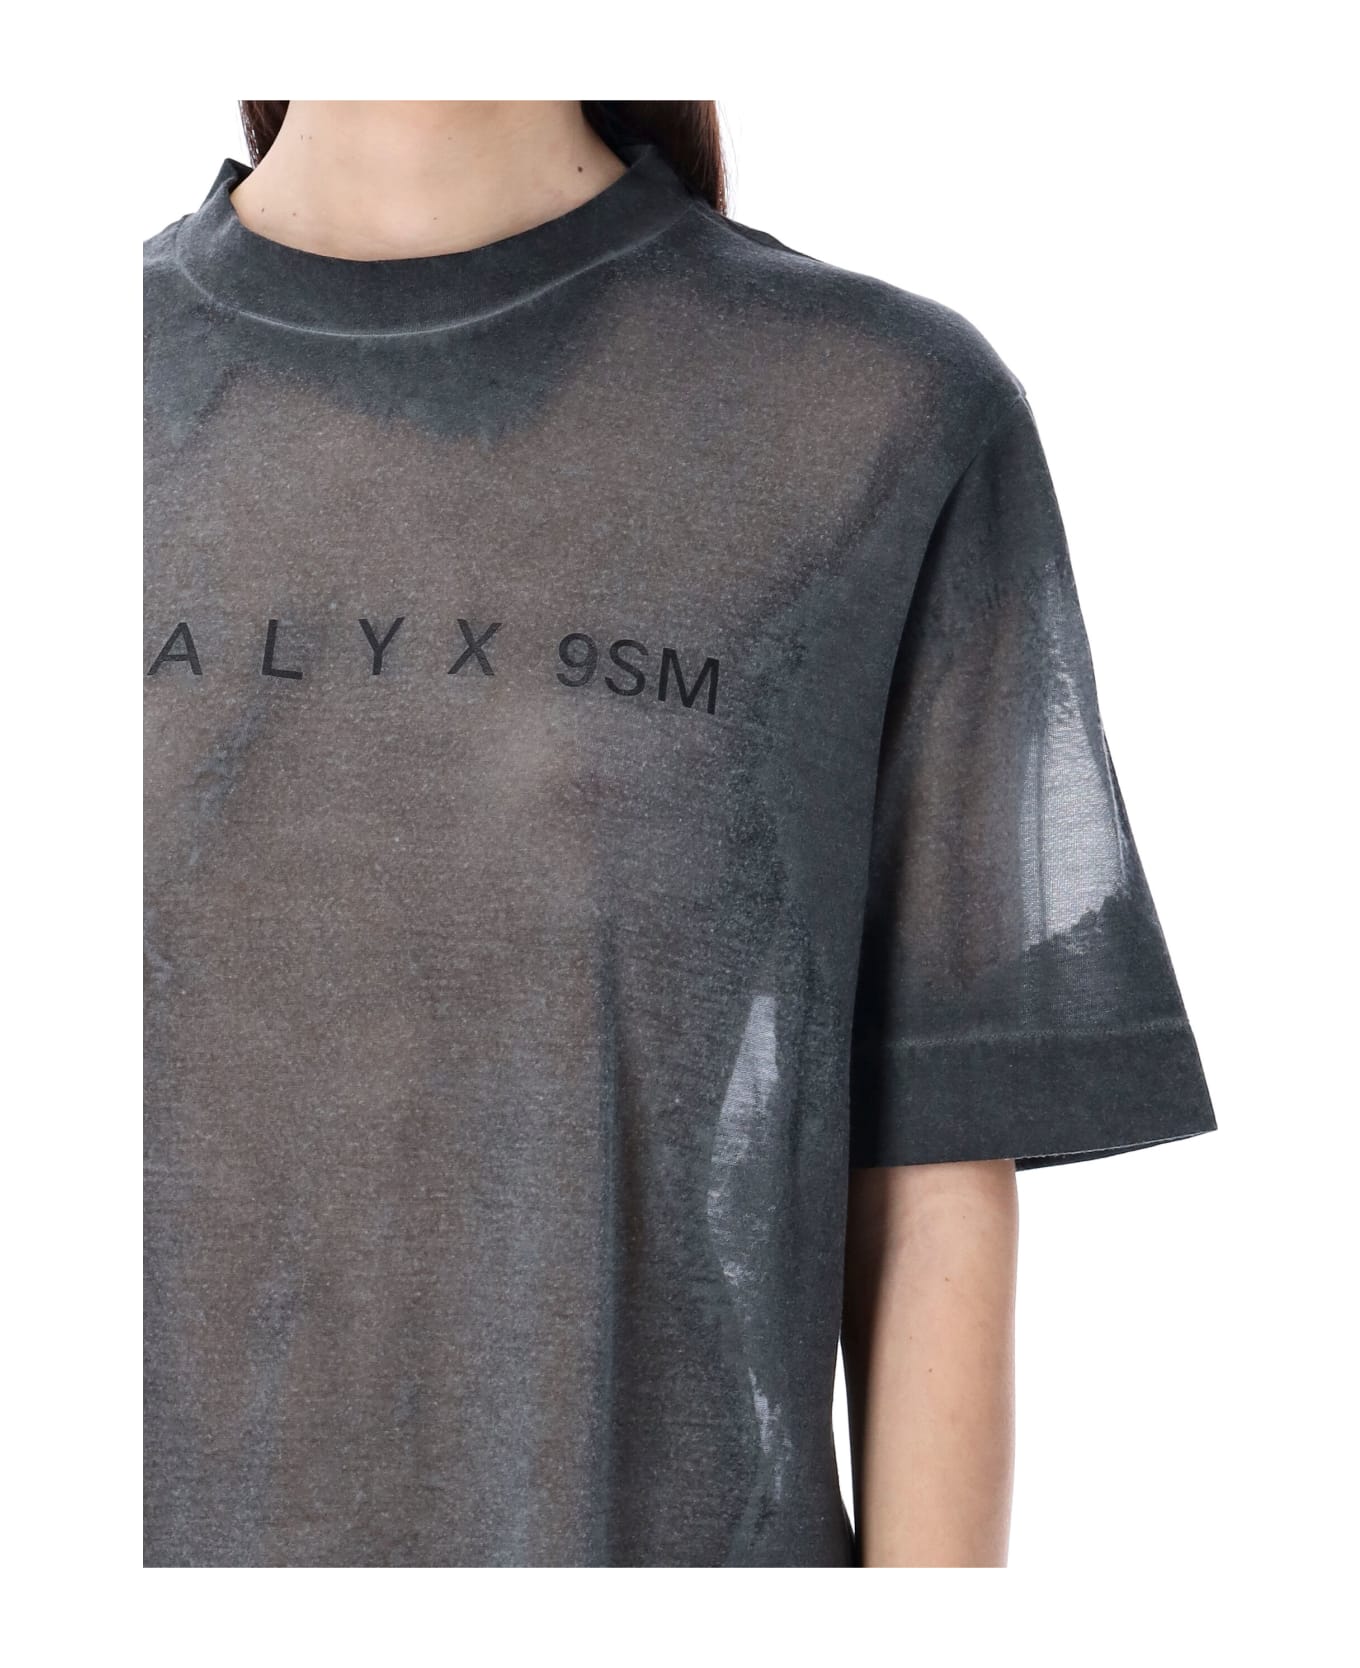 1017 ALYX 9SM Translucent Tee - BLACK